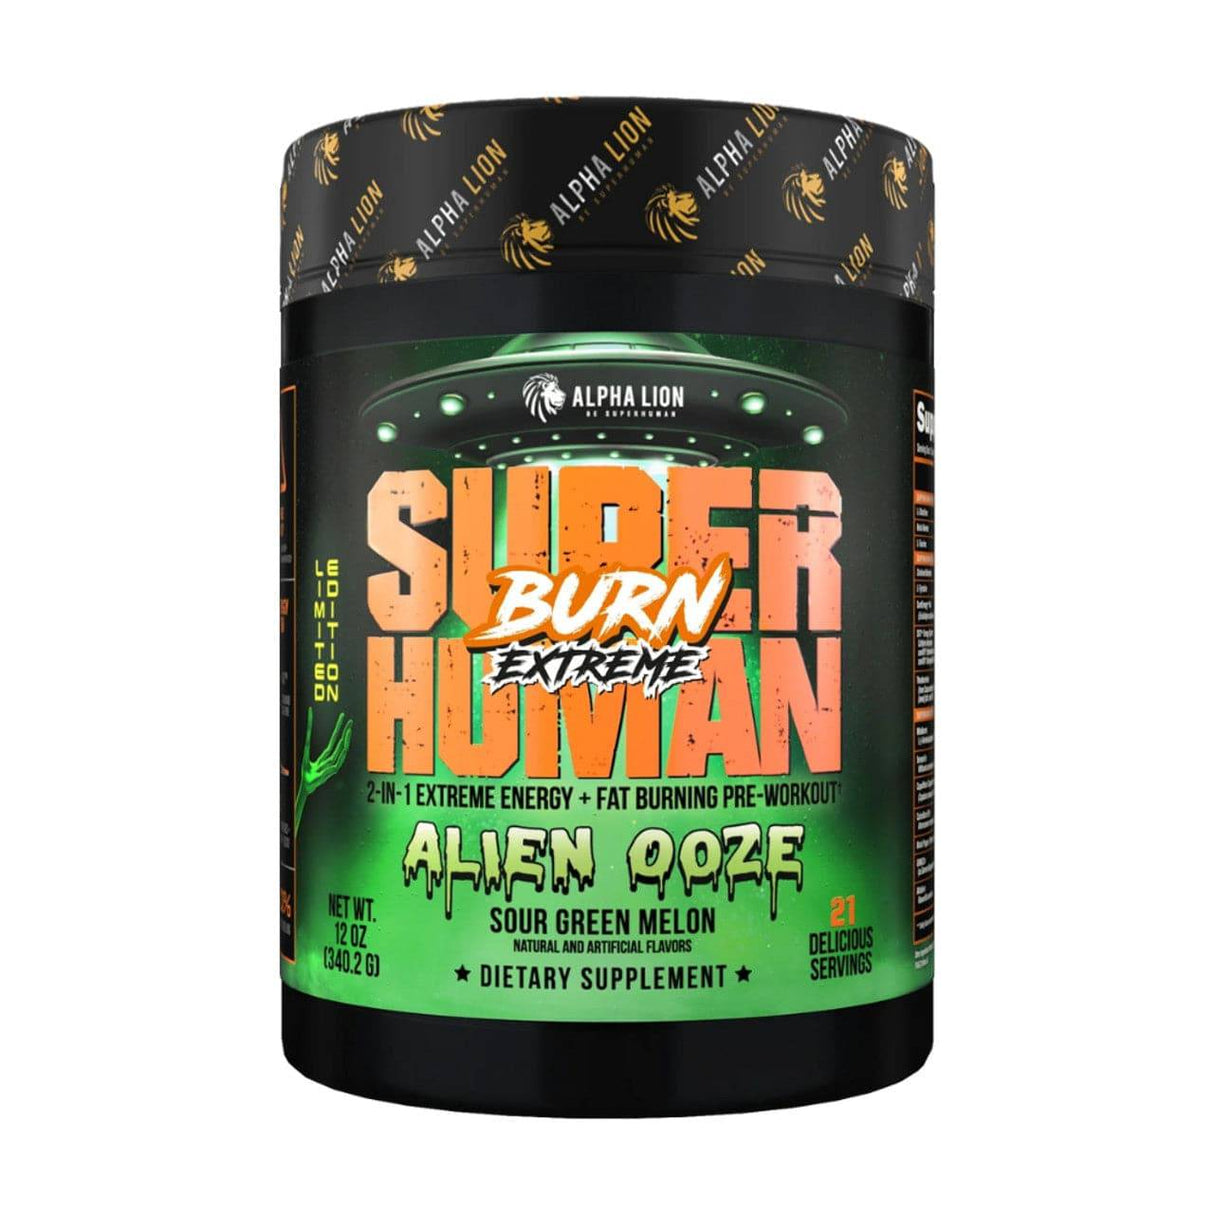 Superhuman Burn - Alpha Lion - Prime Sports Nutrition